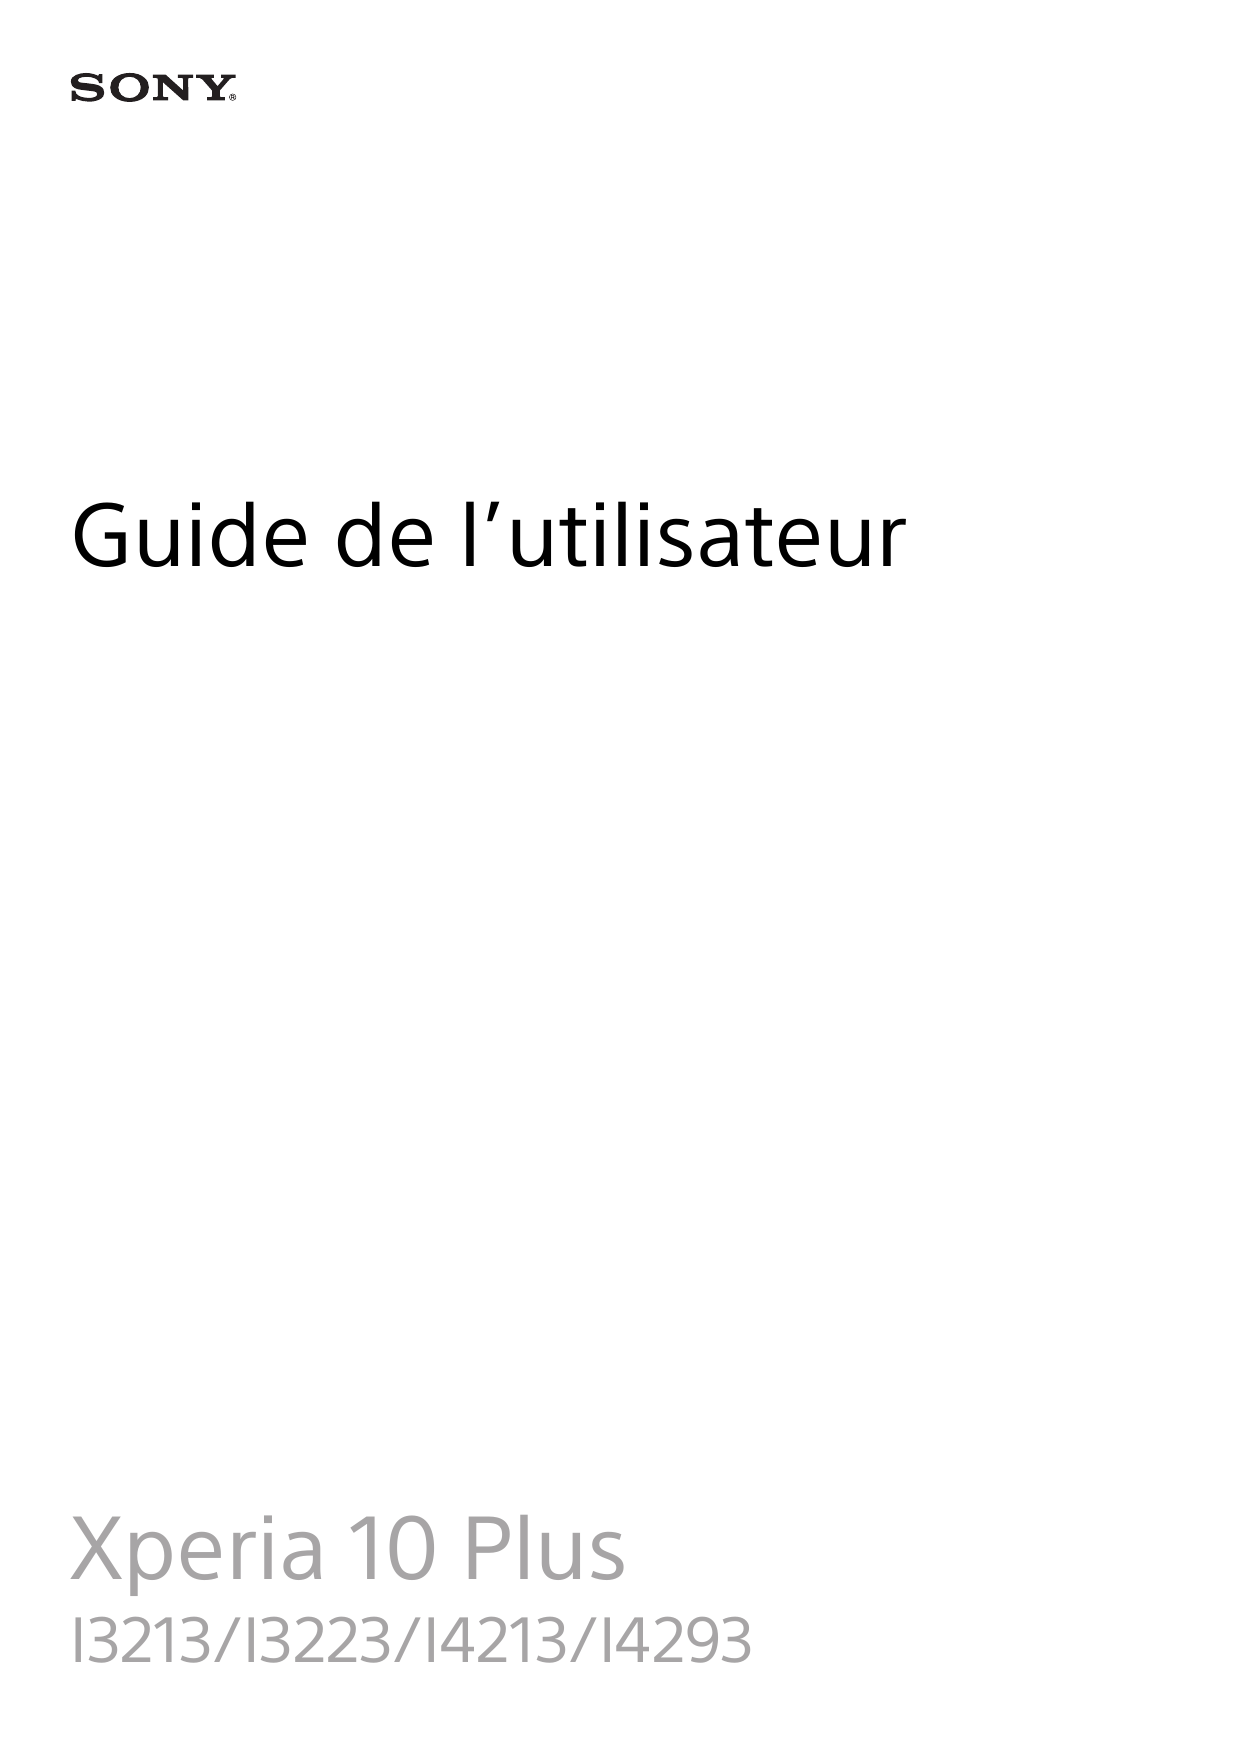 Guide de l’utilisateurXperia 10 PlusI3213/I3223/I4213/I4293